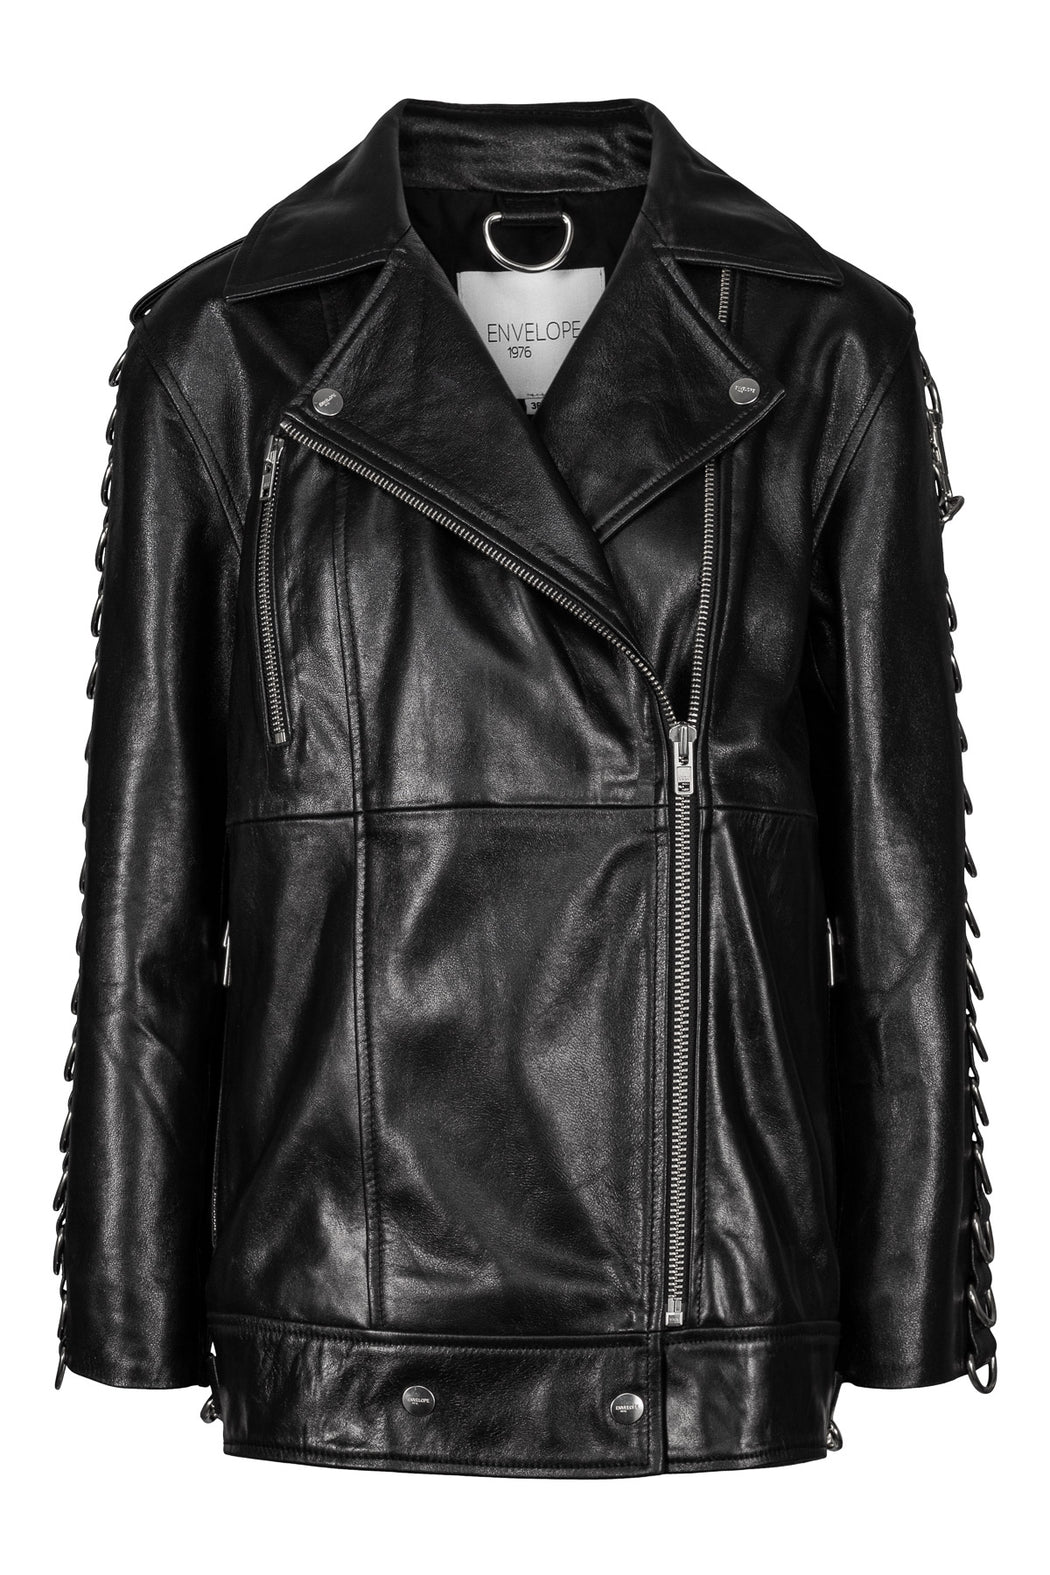 Envelope1976 Stone biker jacket - Leather Jacket Black